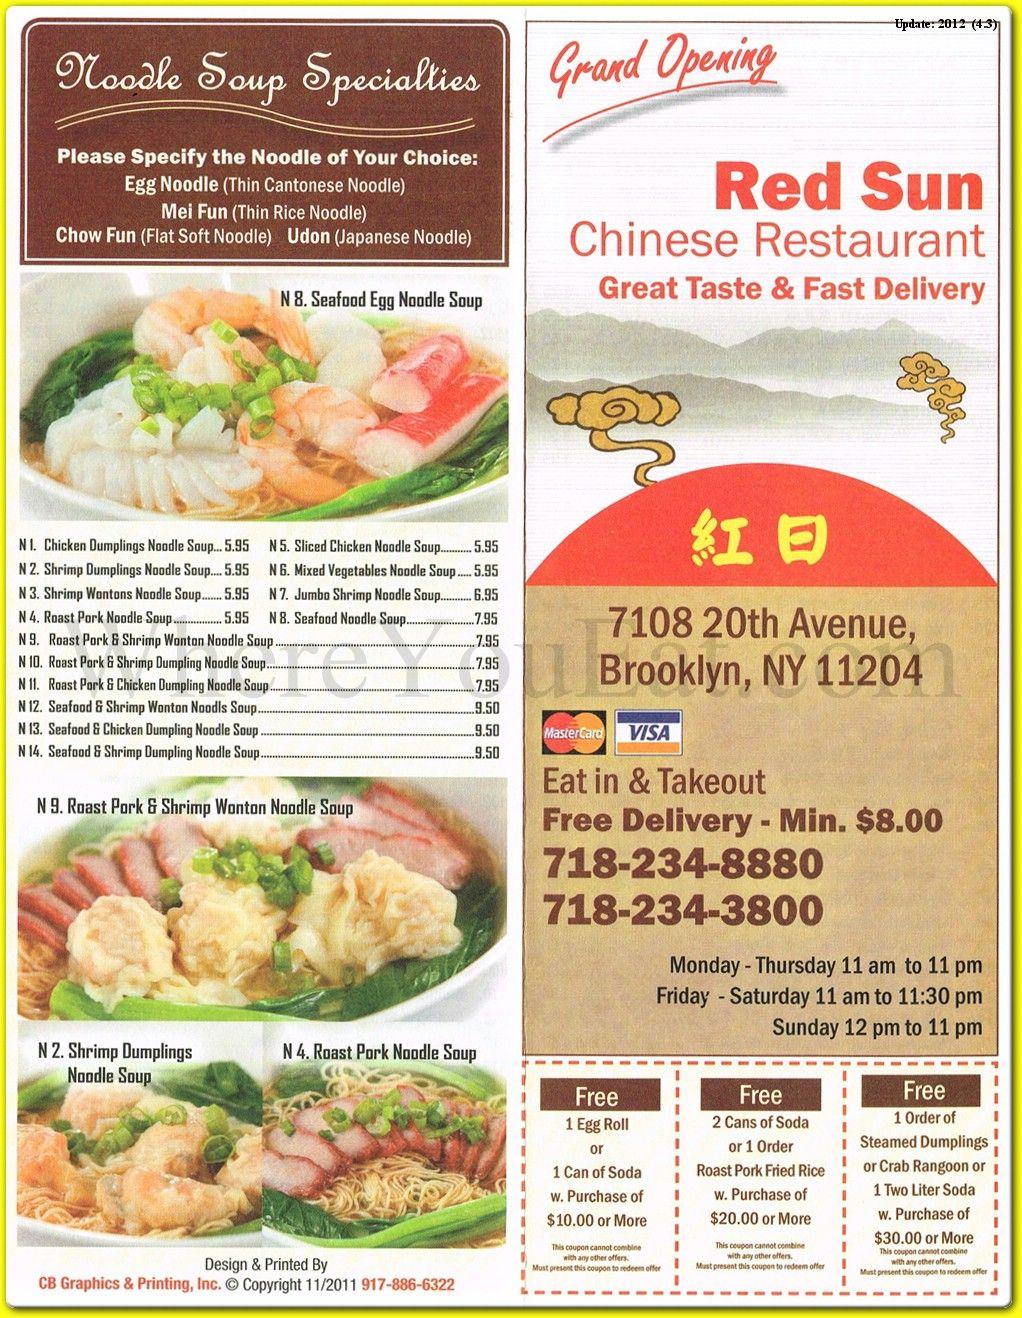 Red Sun Restaurant Logo - Red Sun Chinese Restaurant in Bensonhurst, Brooklyn, 11204: Menus